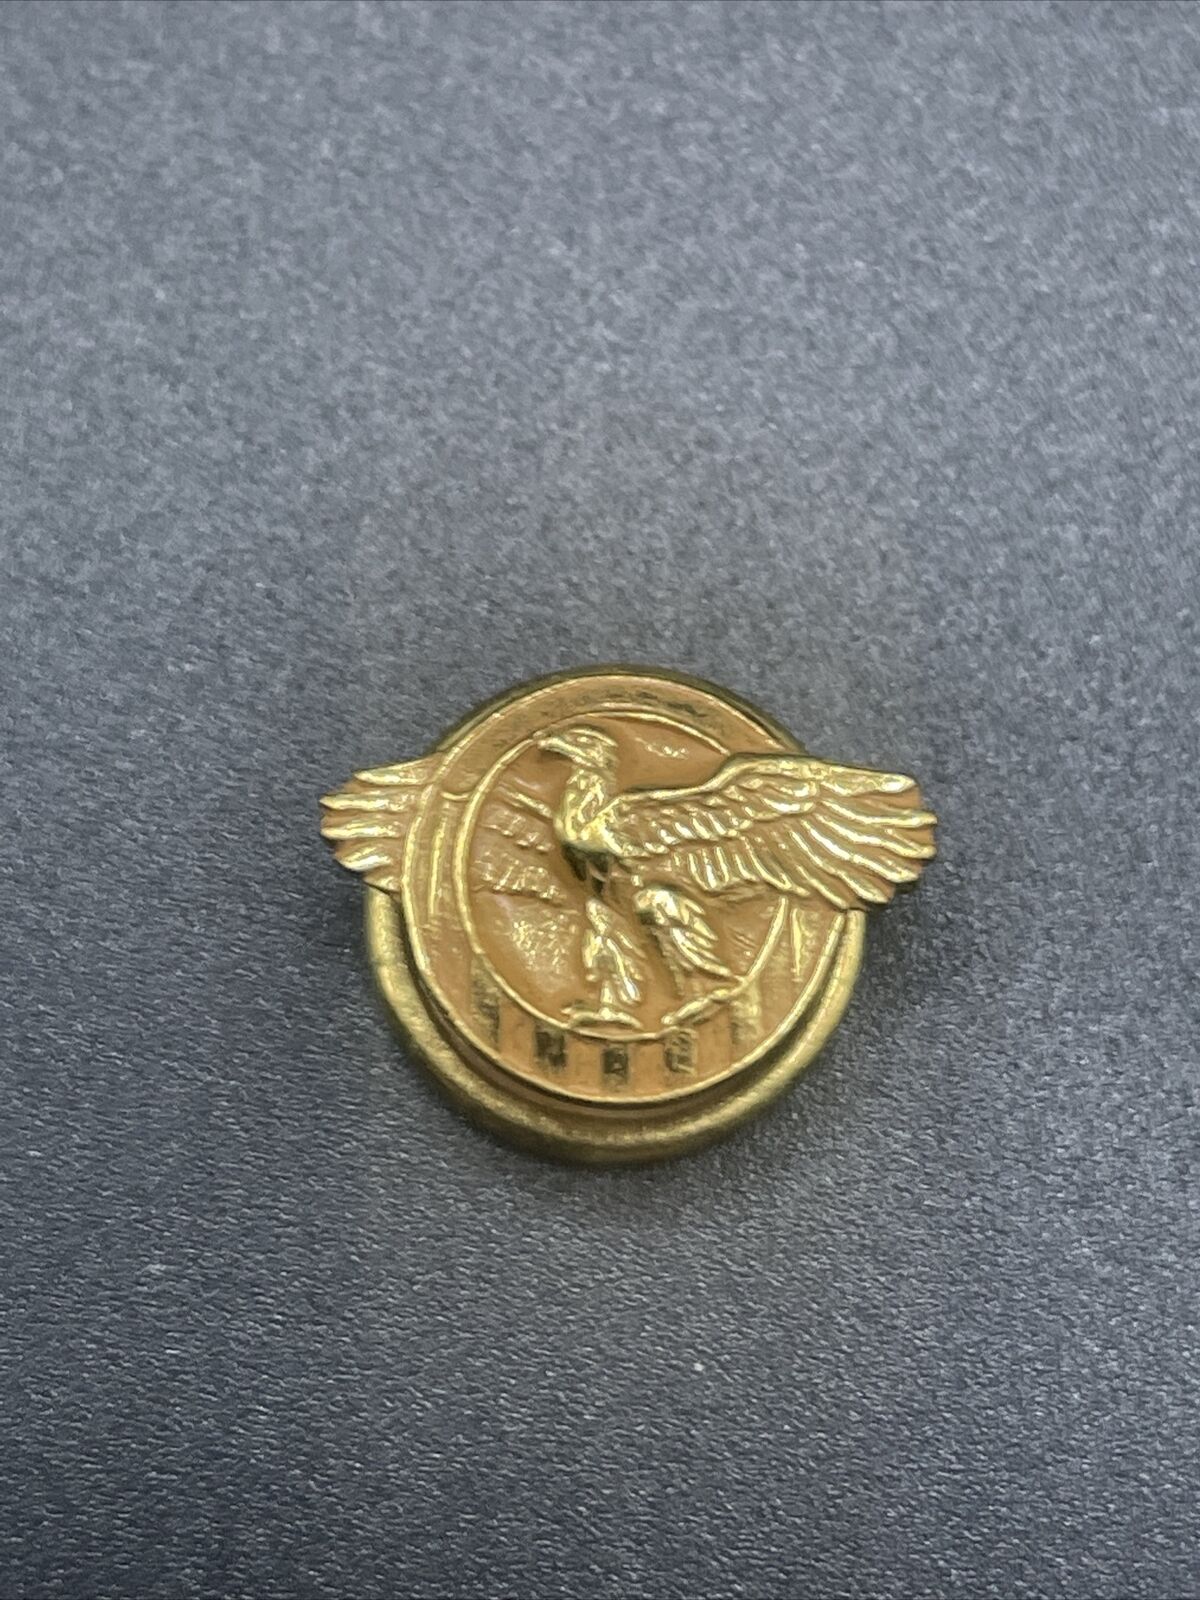 WW2 Ruptured Duck Lapel Pin, Discharge WWII